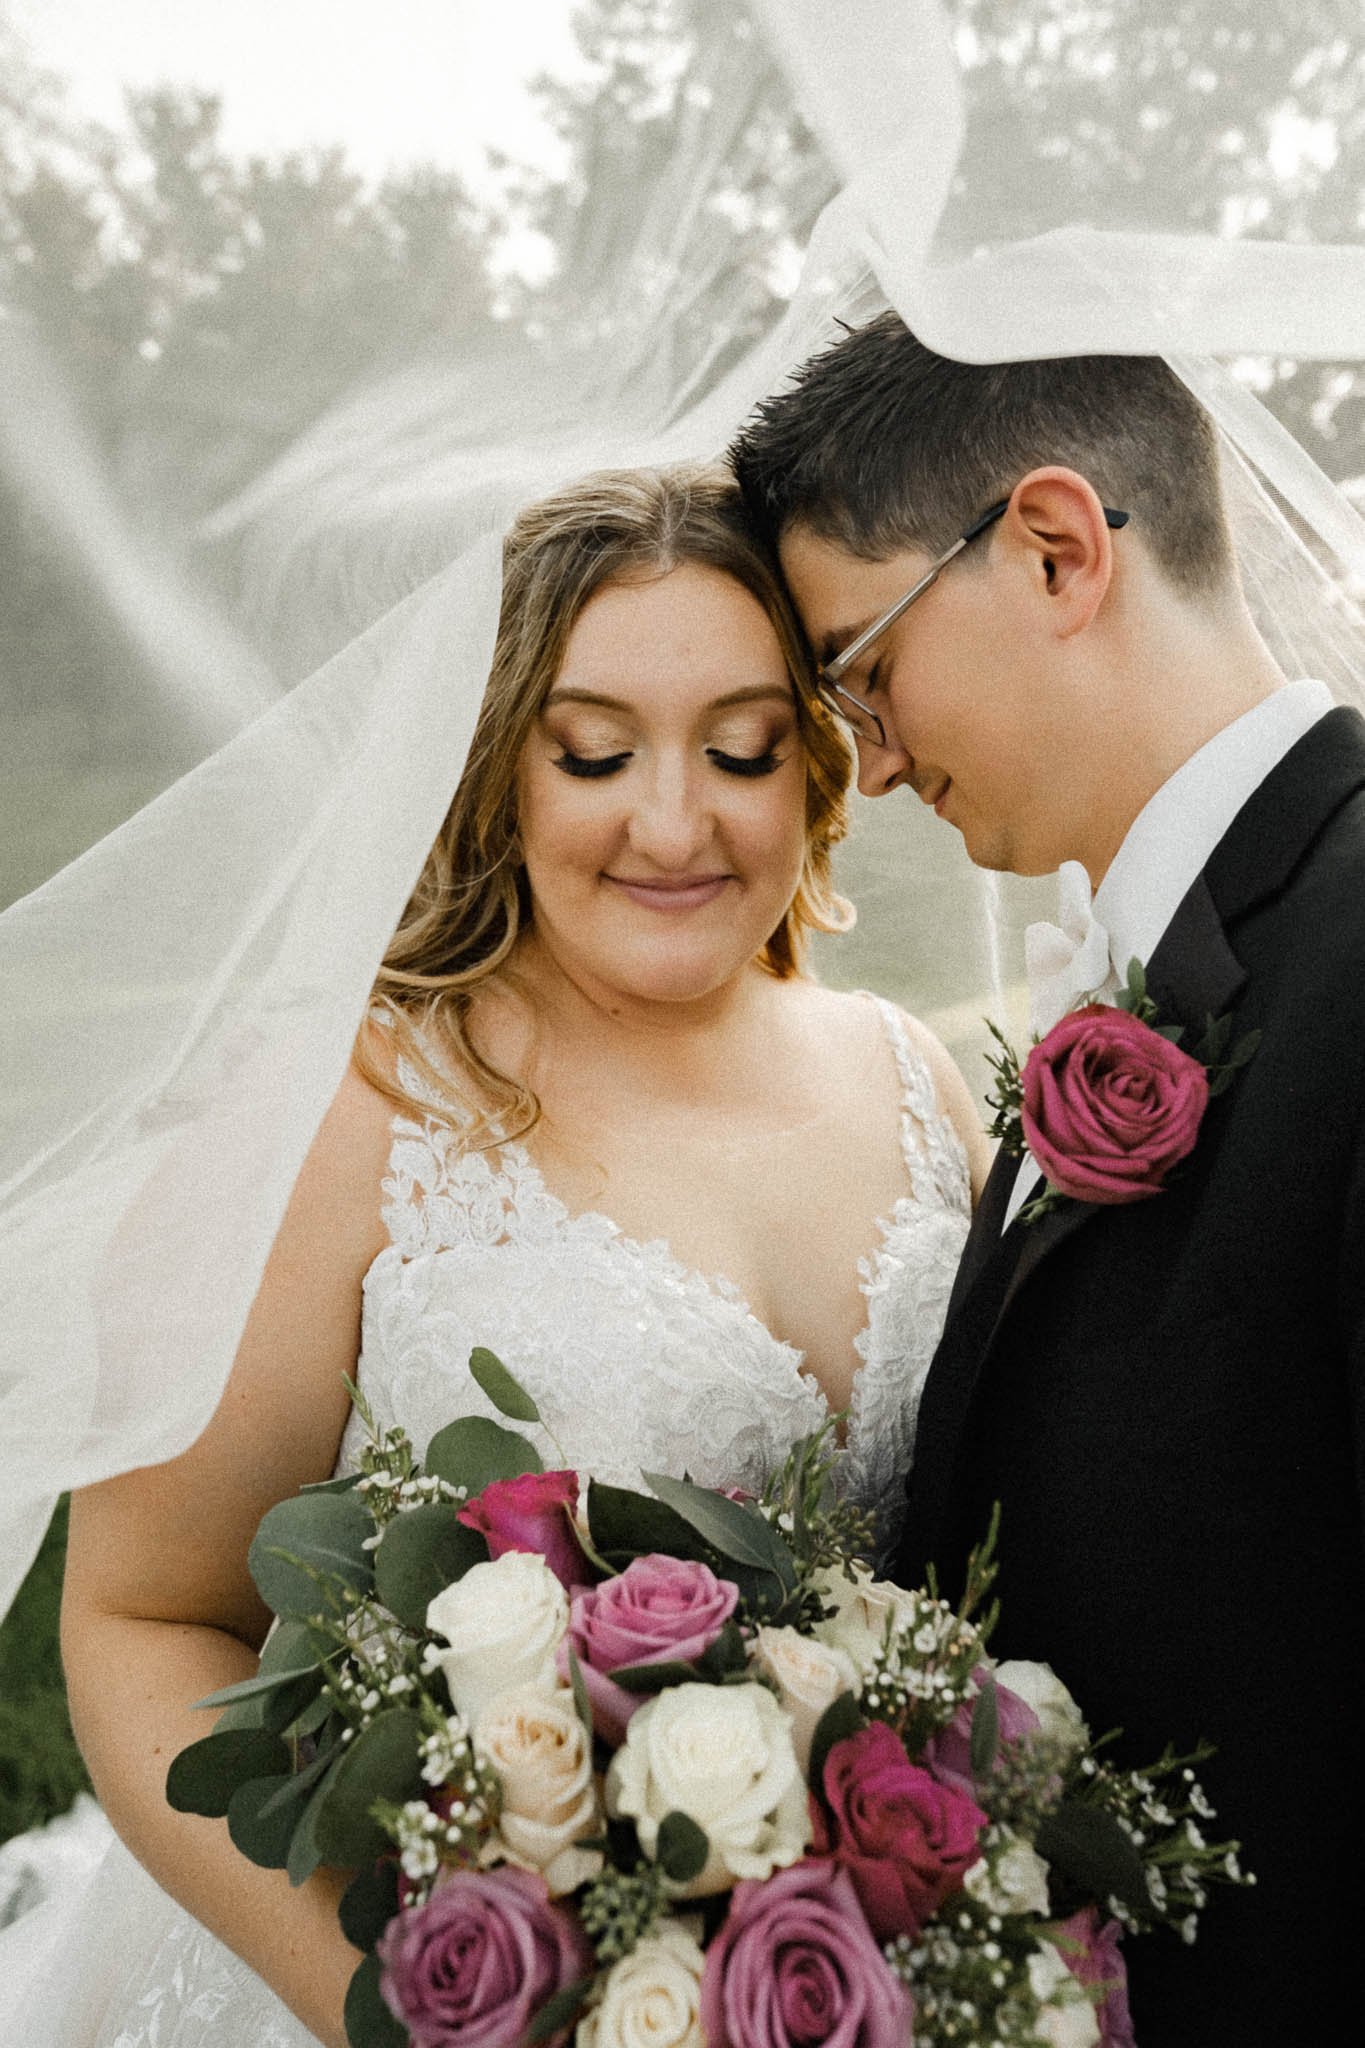  pittsburgh wedding photographers bride and groom photos 